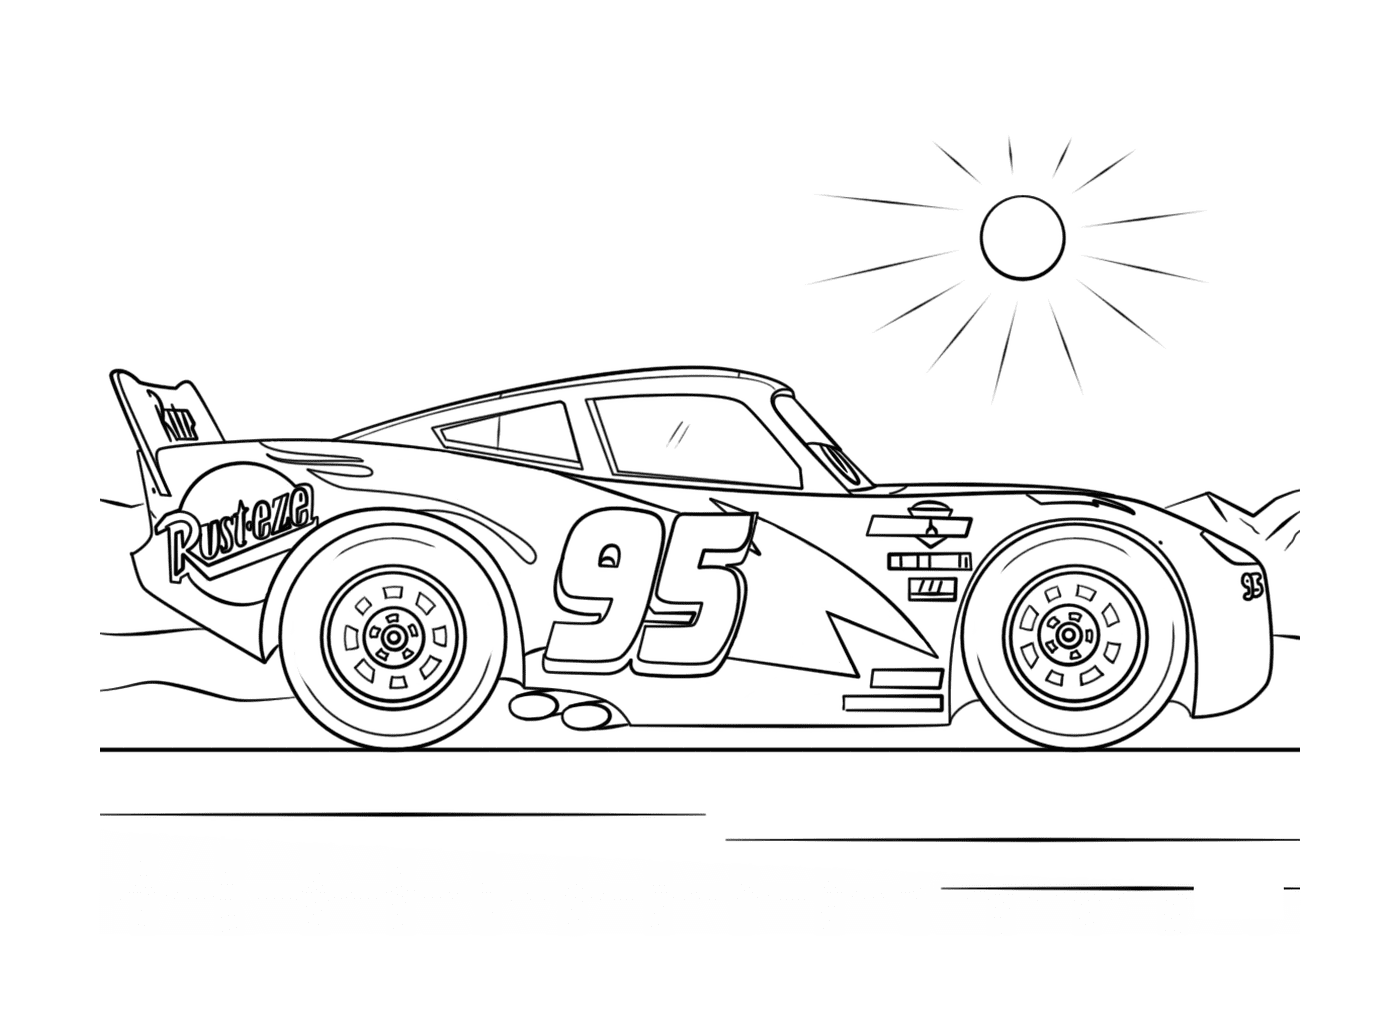   Lightning McQueen, champion de la route 